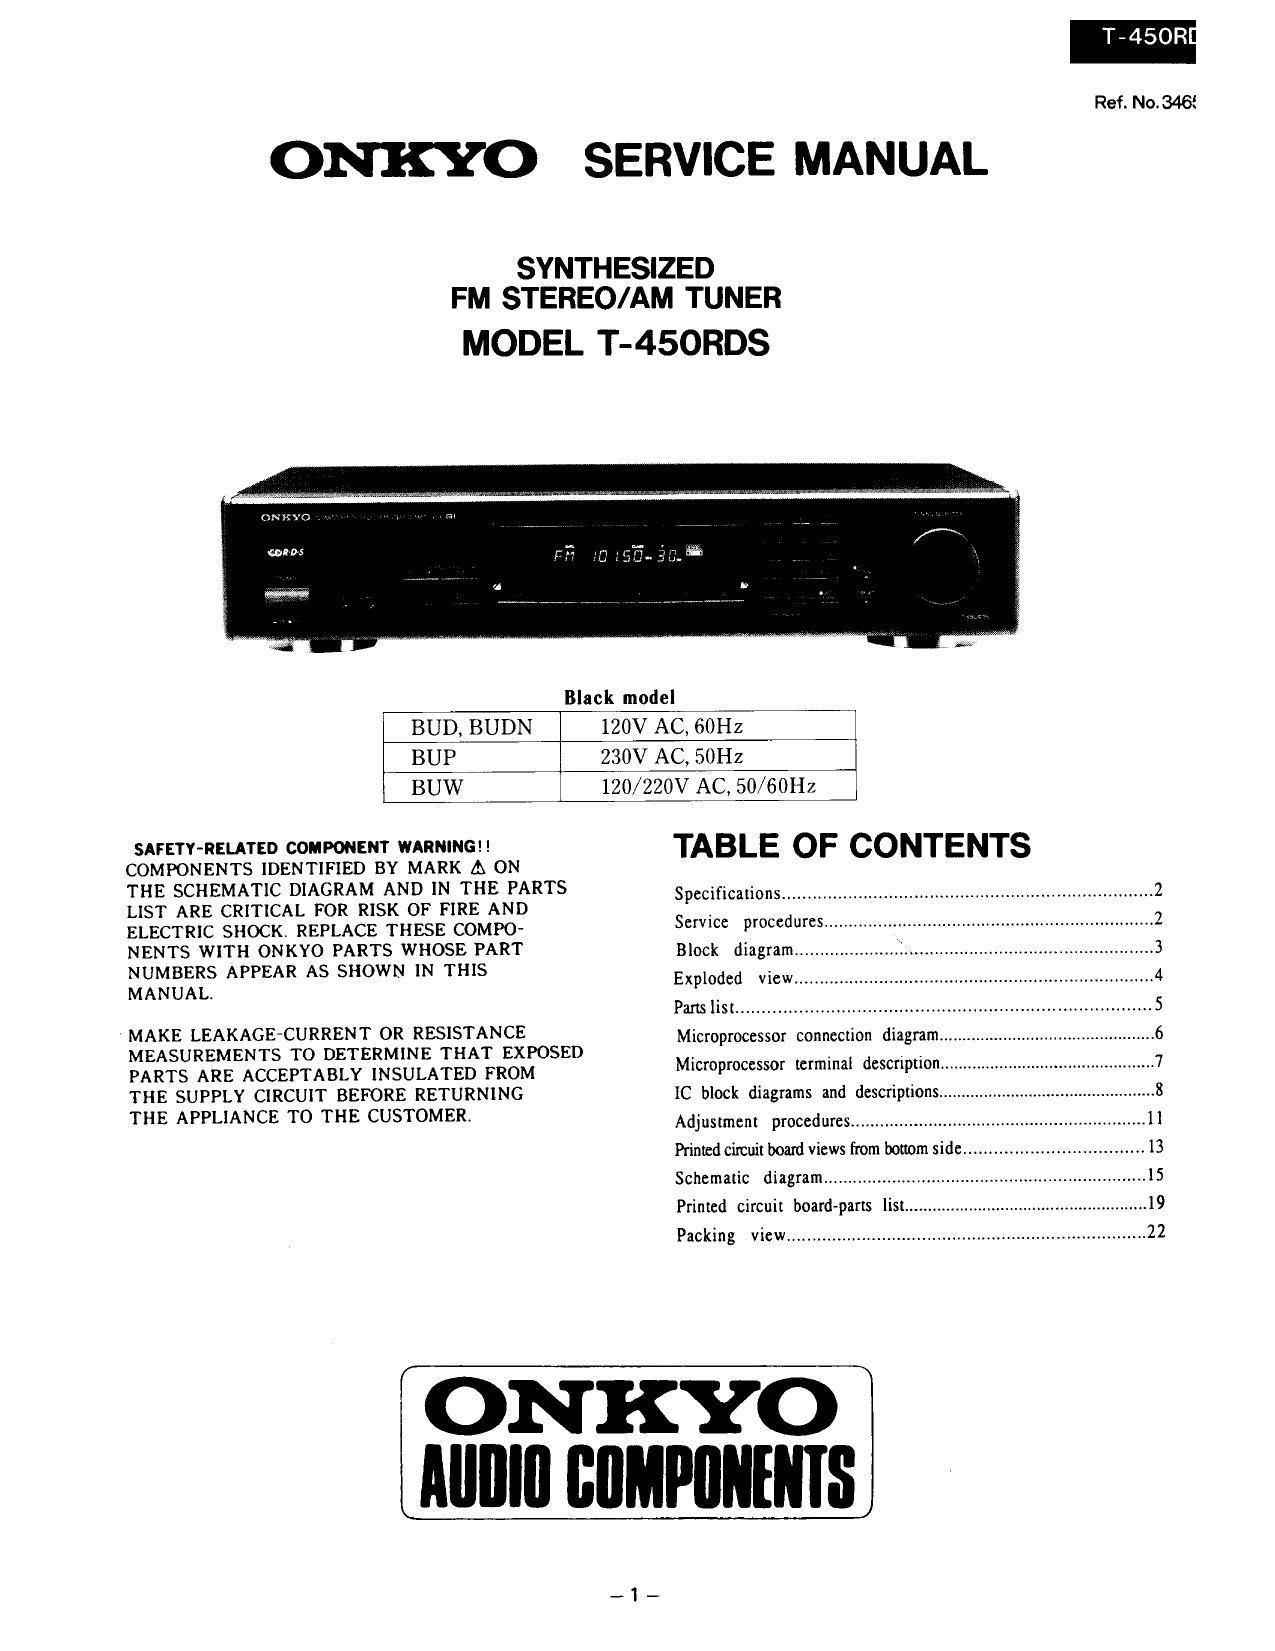 Onkyo T 450 RDS Service Manual